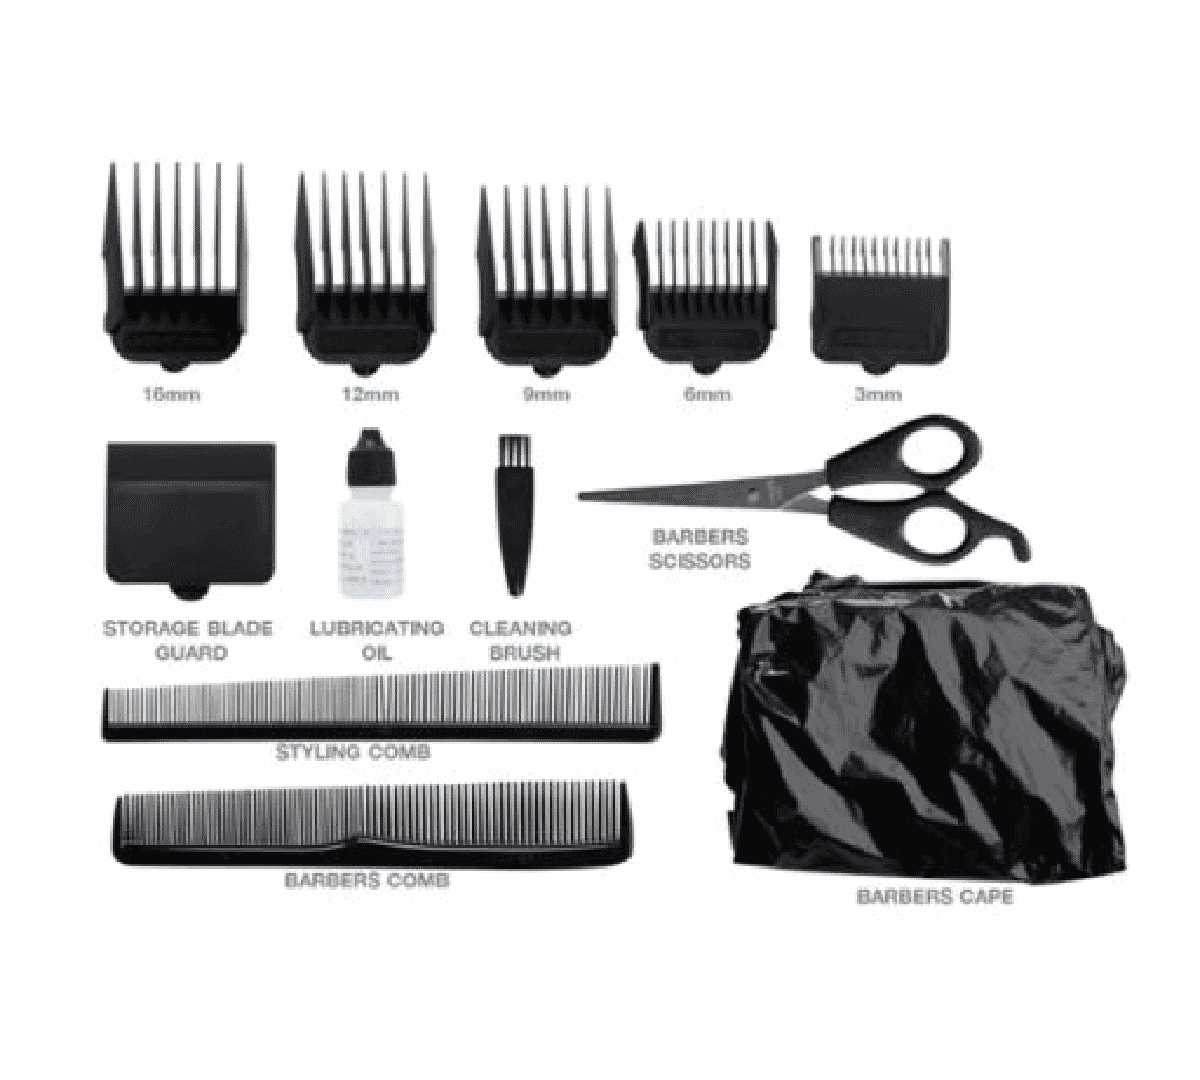 remington home barber haircut kit 12 piece